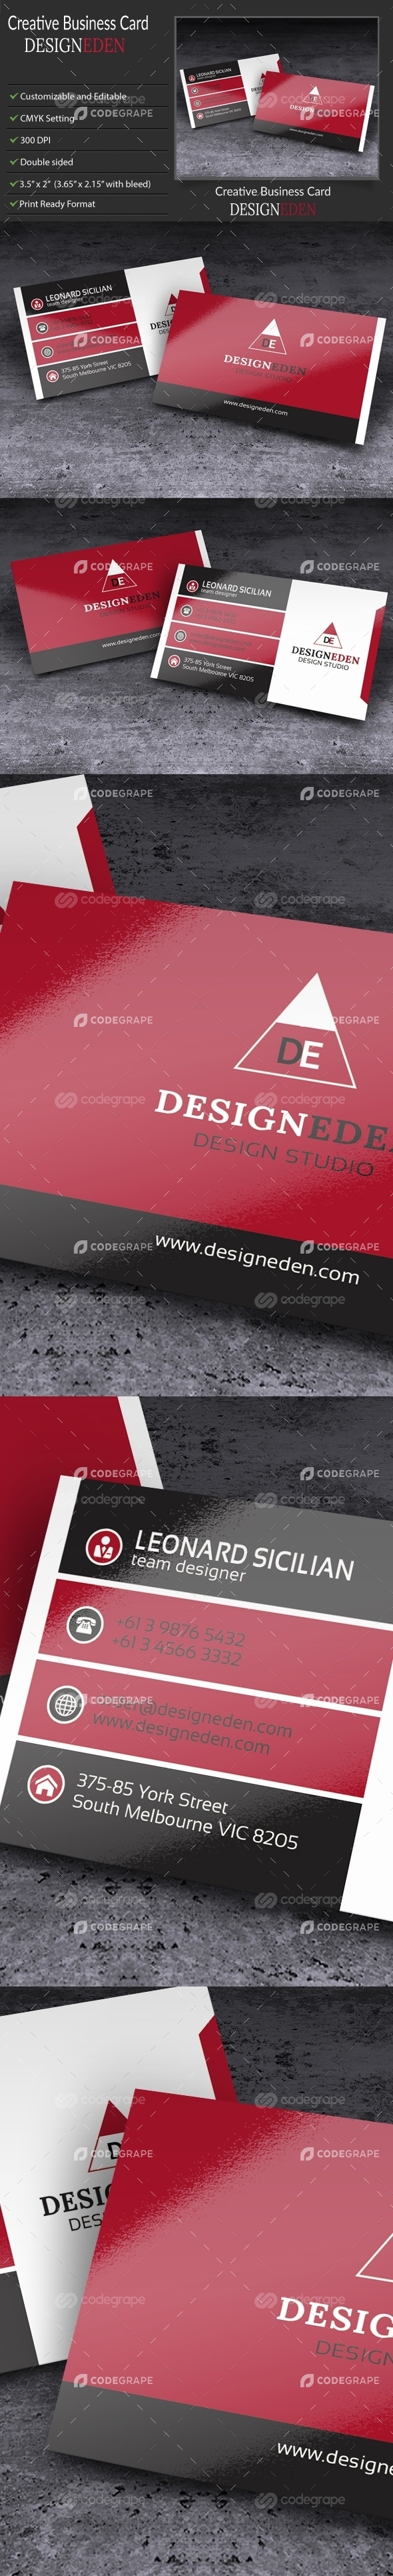 Modern Creative Business Card - DesignEden